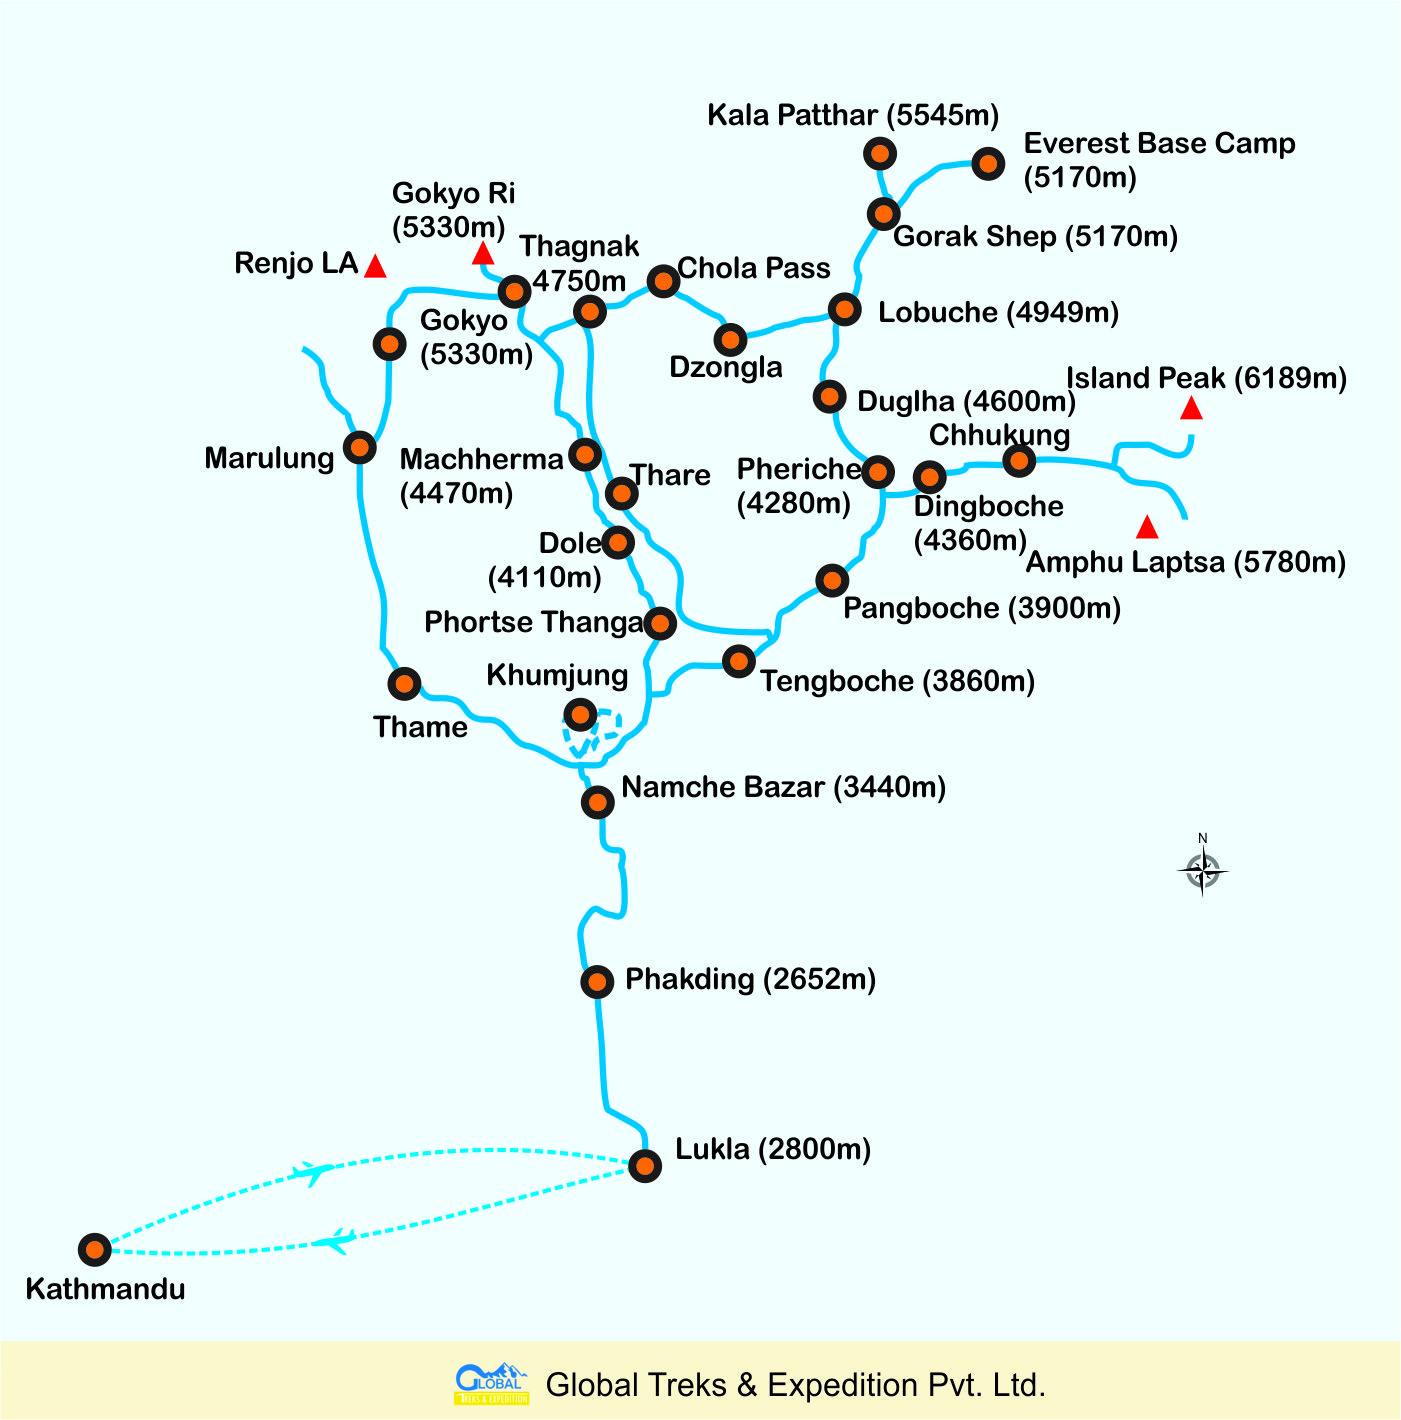 Map of Everest Base Camp Trekking